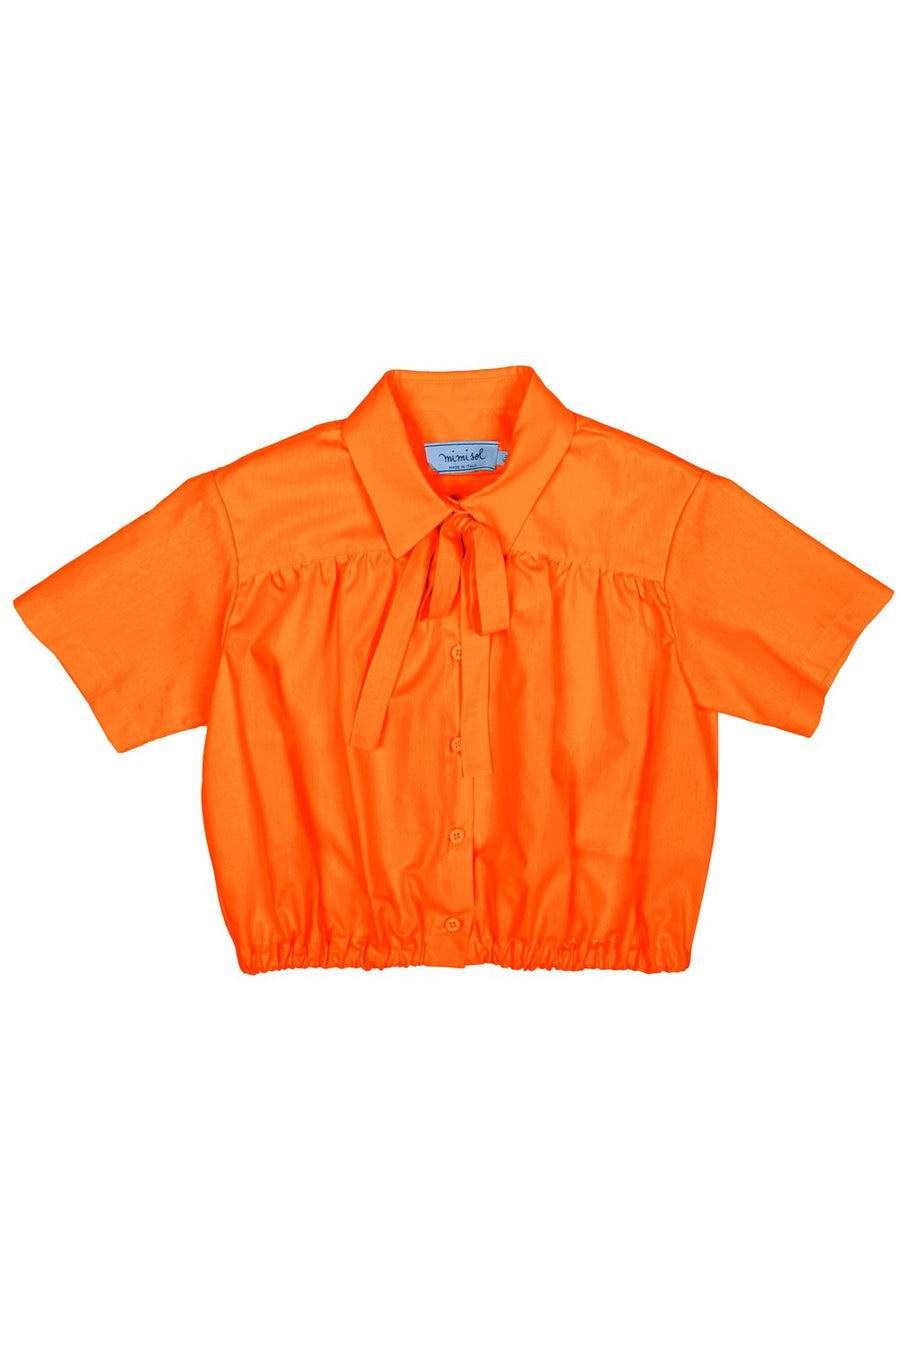 Orange bow blouse by Mimisol